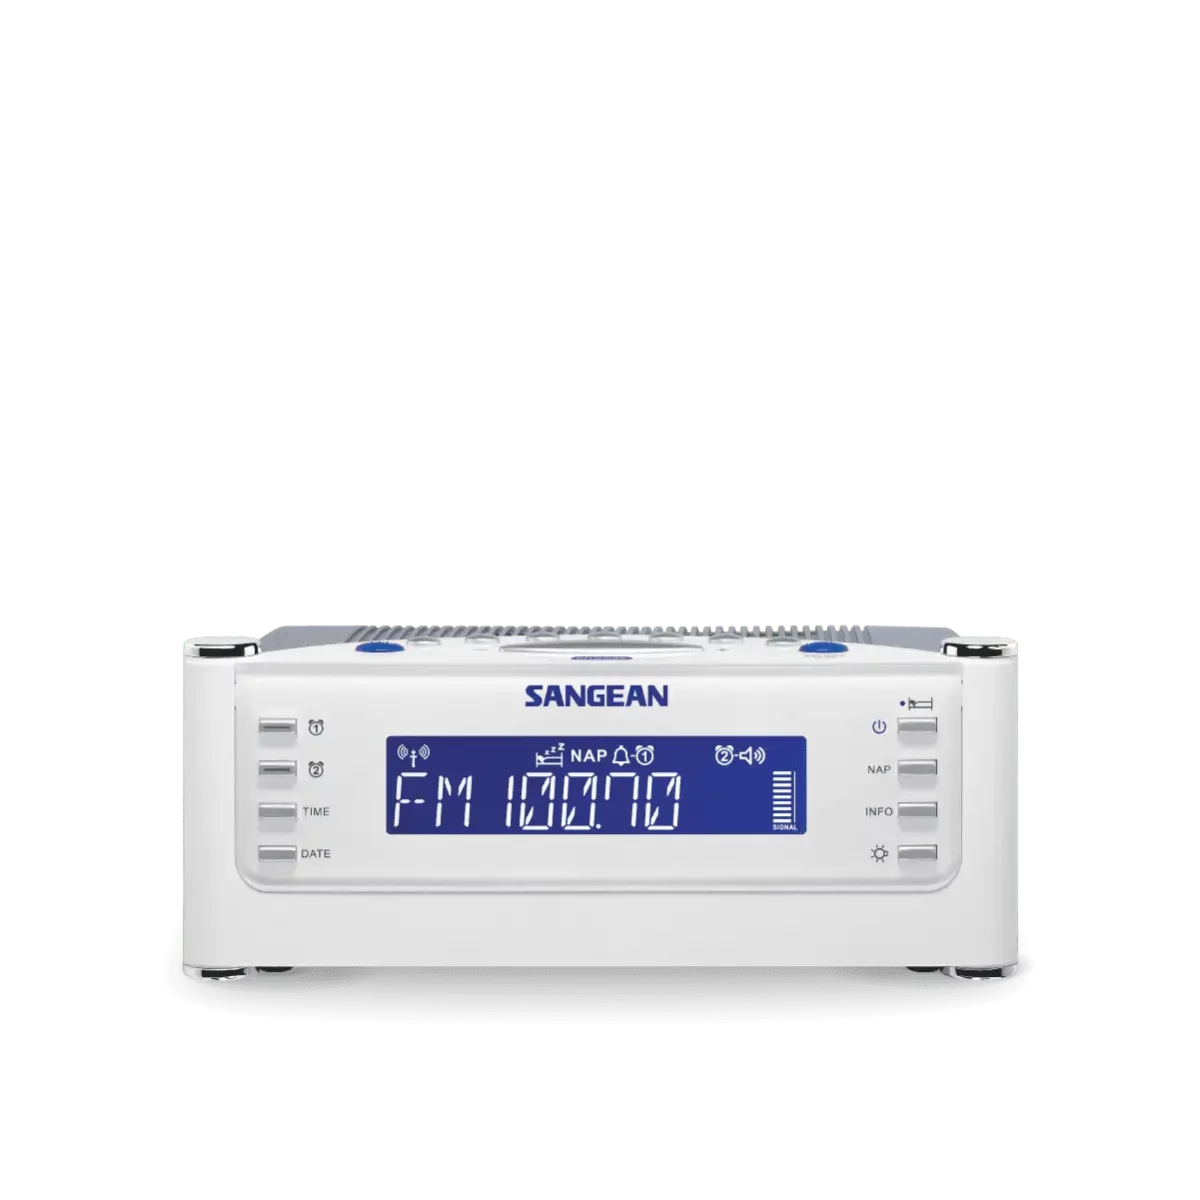 Sangean RCR-22 AM / FM-RBDS / AUX Digital Tuning Radio in white front view